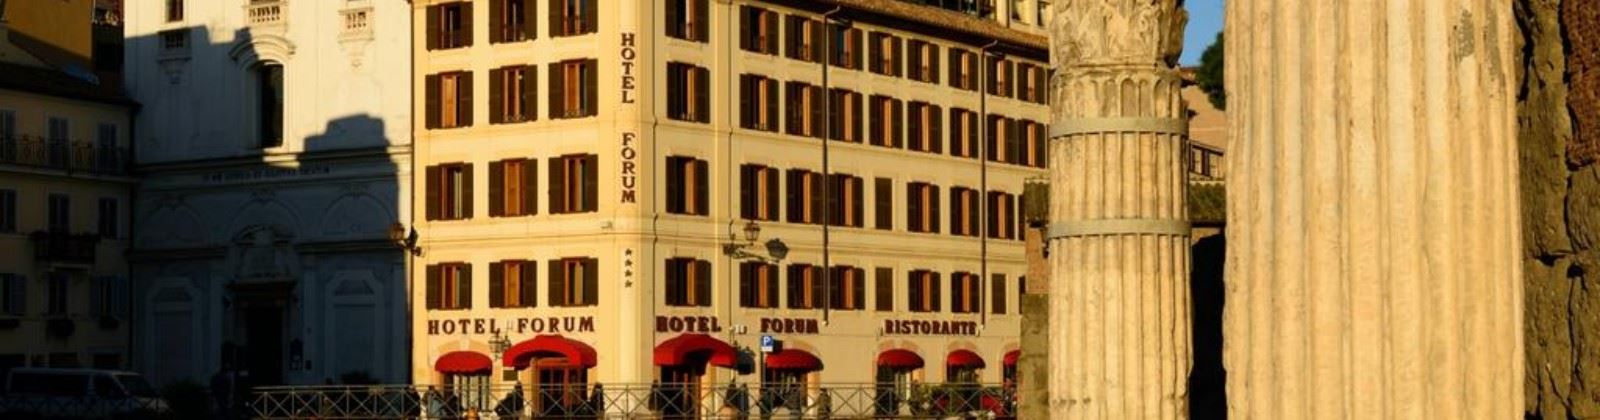 OLEVENE image - hotel-forum-roma-olevene-restaurant-congres-